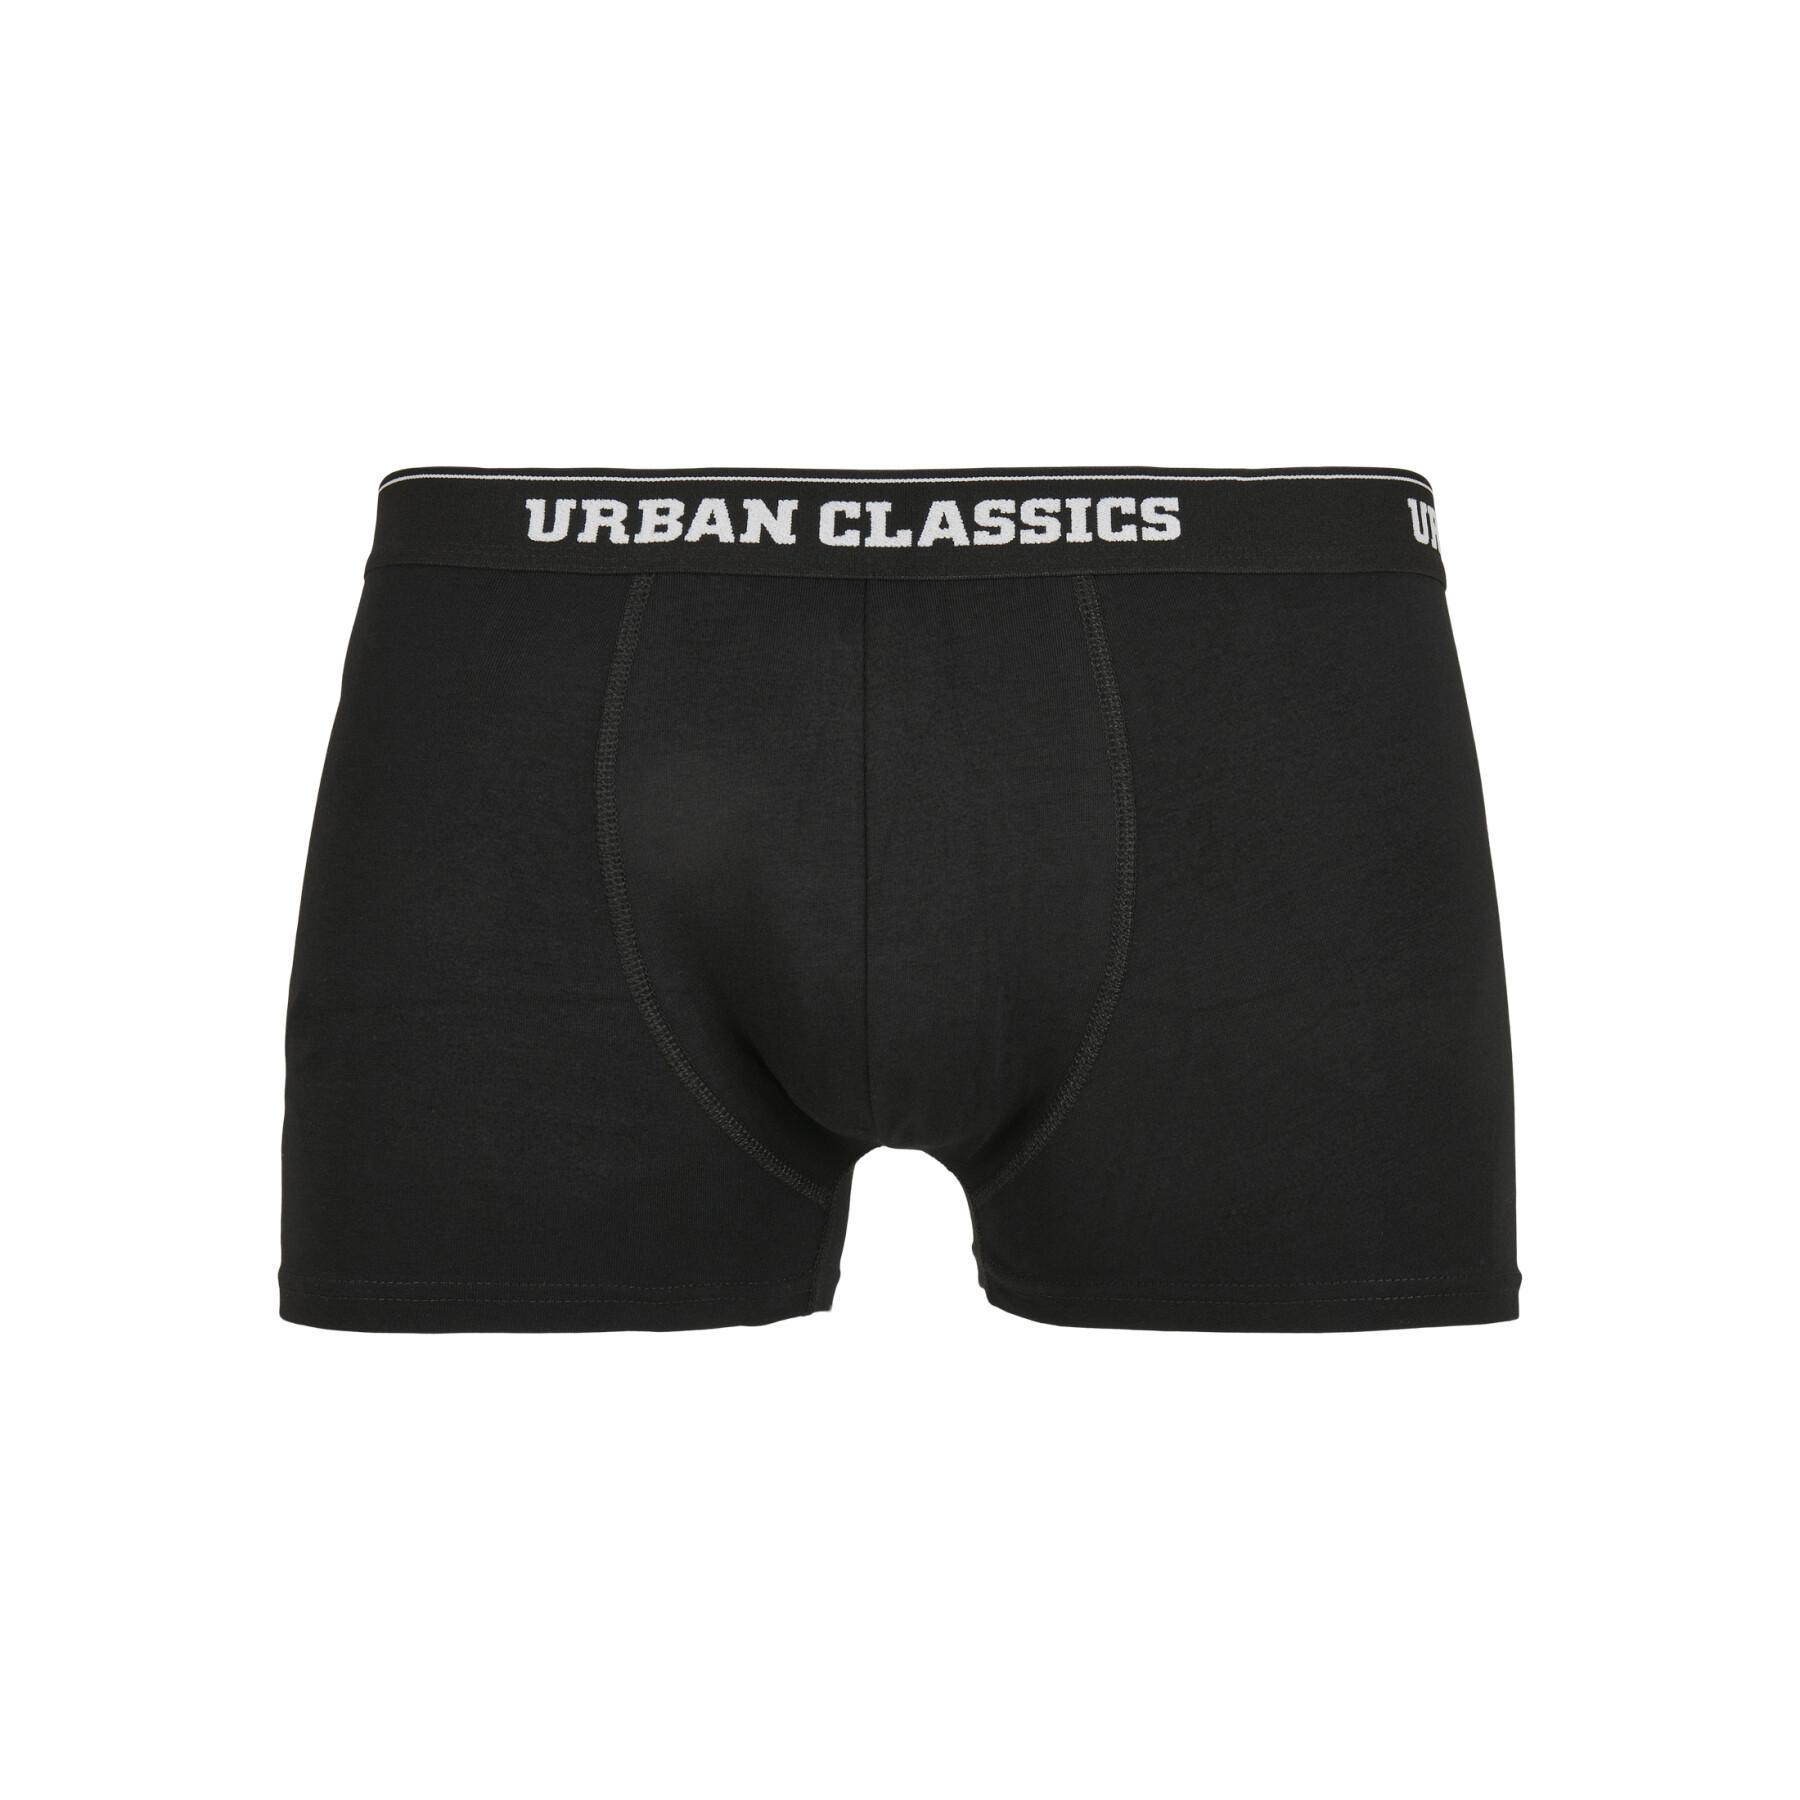 Boxers Urban Classics organic (Grandes tailles) (x2)